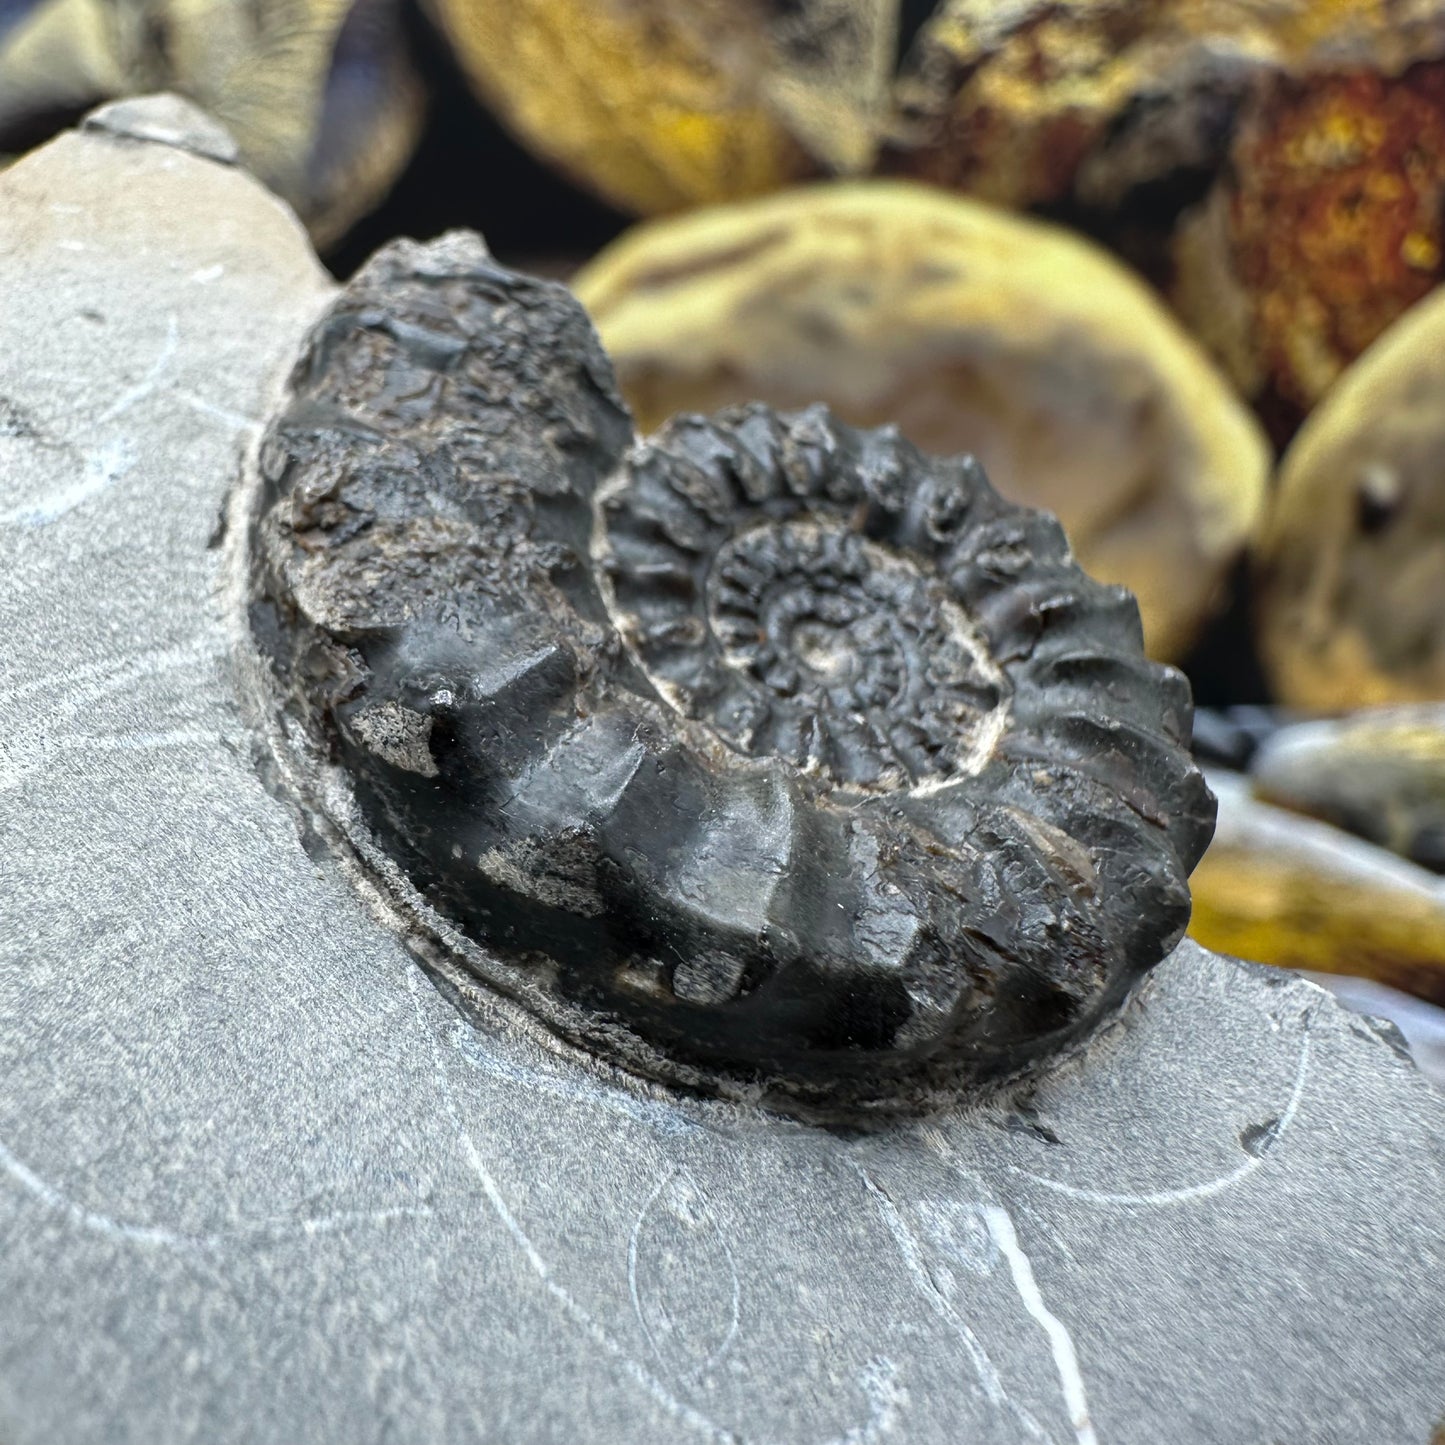 Pleuroceras paucicostatum ammonite fossil - Whitby, North Yorkshire